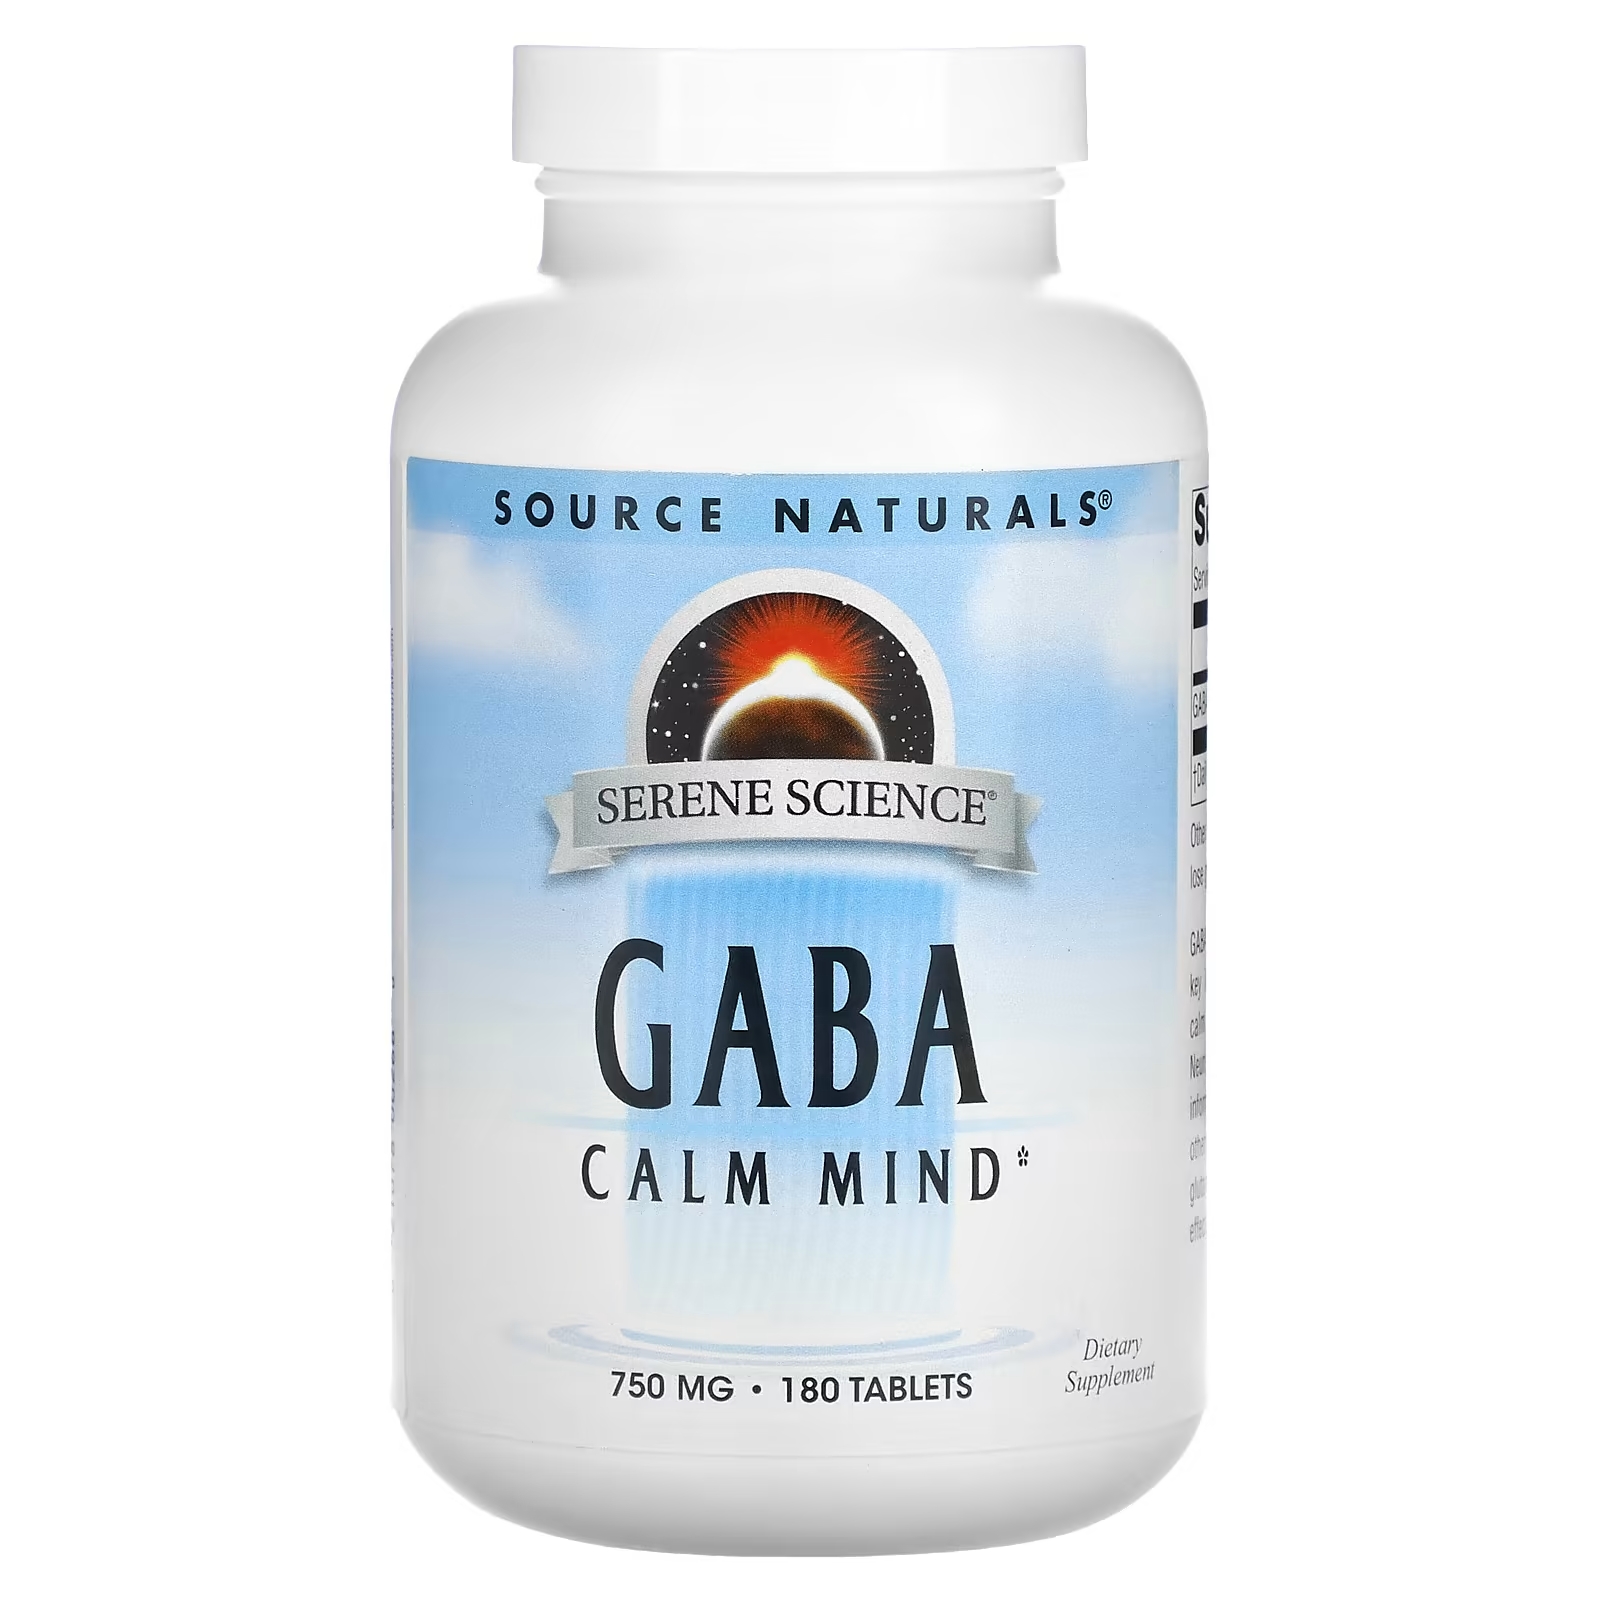 Source Naturals GABA Calm Mind ГАМК 750 мг, 180 таблеток source naturals гамк успокаивающее средство 750 мг 180 капсул